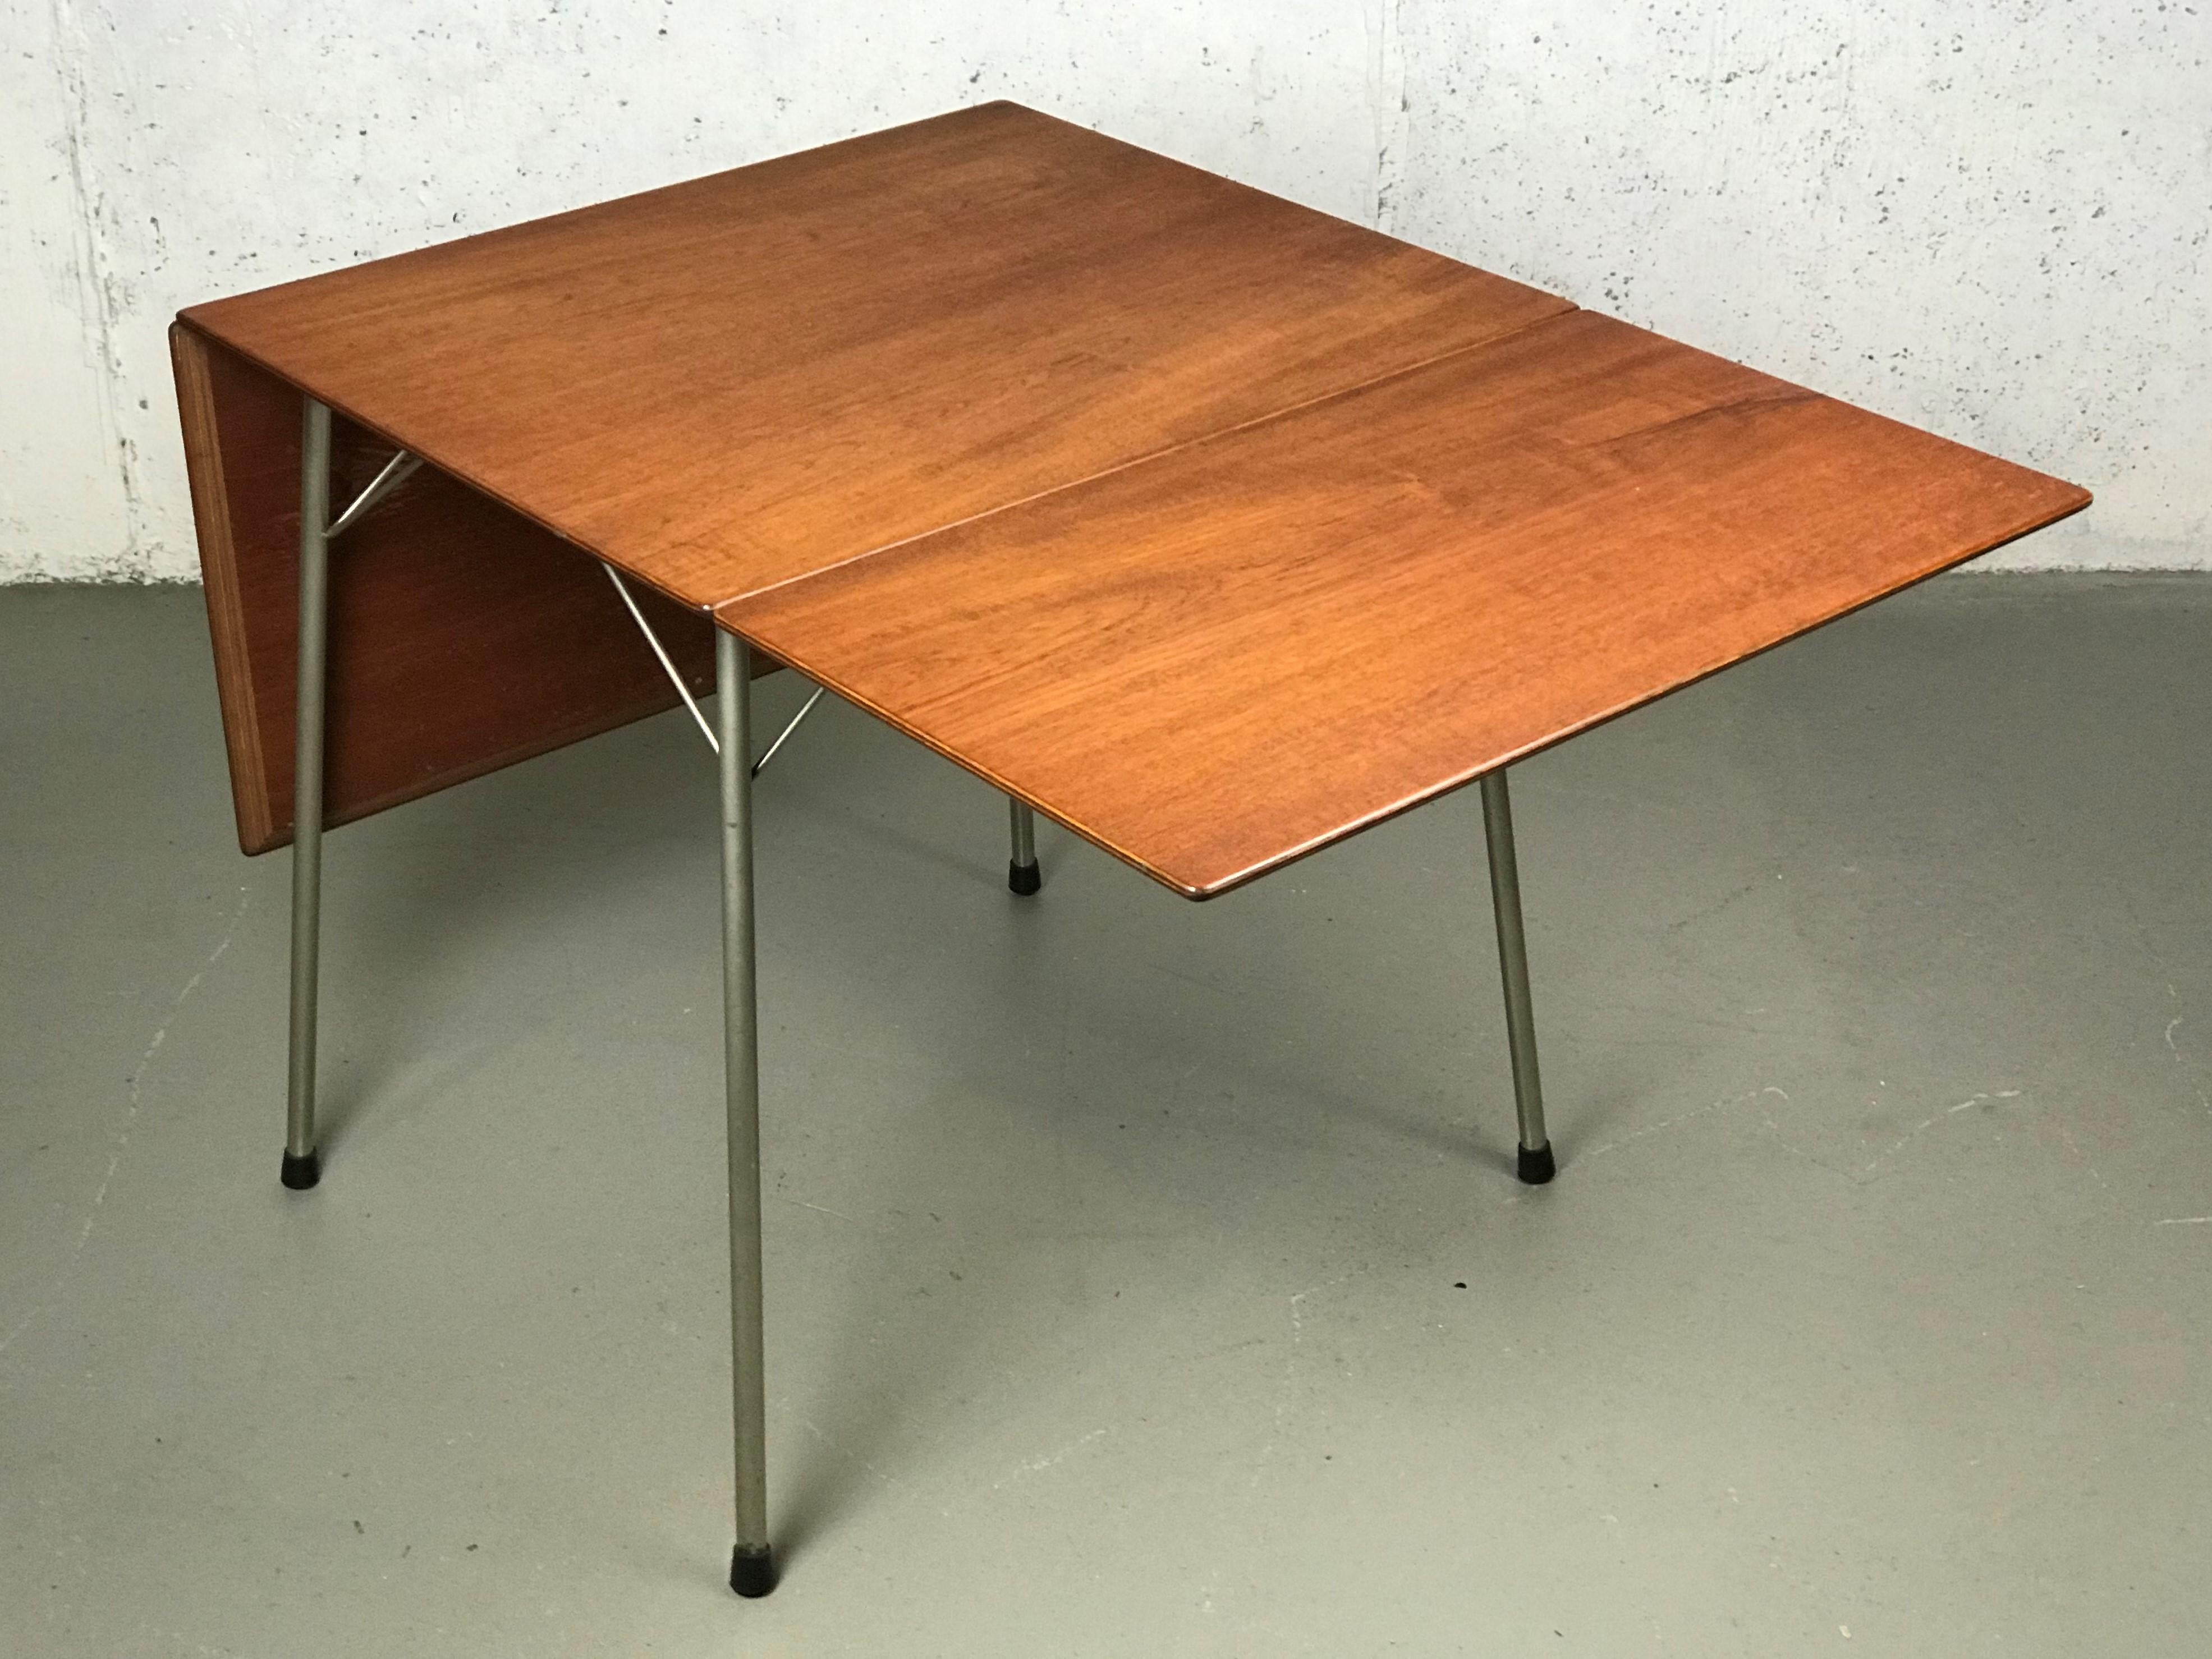 Mid-20th Century Danish Teak Drop-Leaf Dining Table by Arne Jacobsen for Fritz Hansen Model 3601